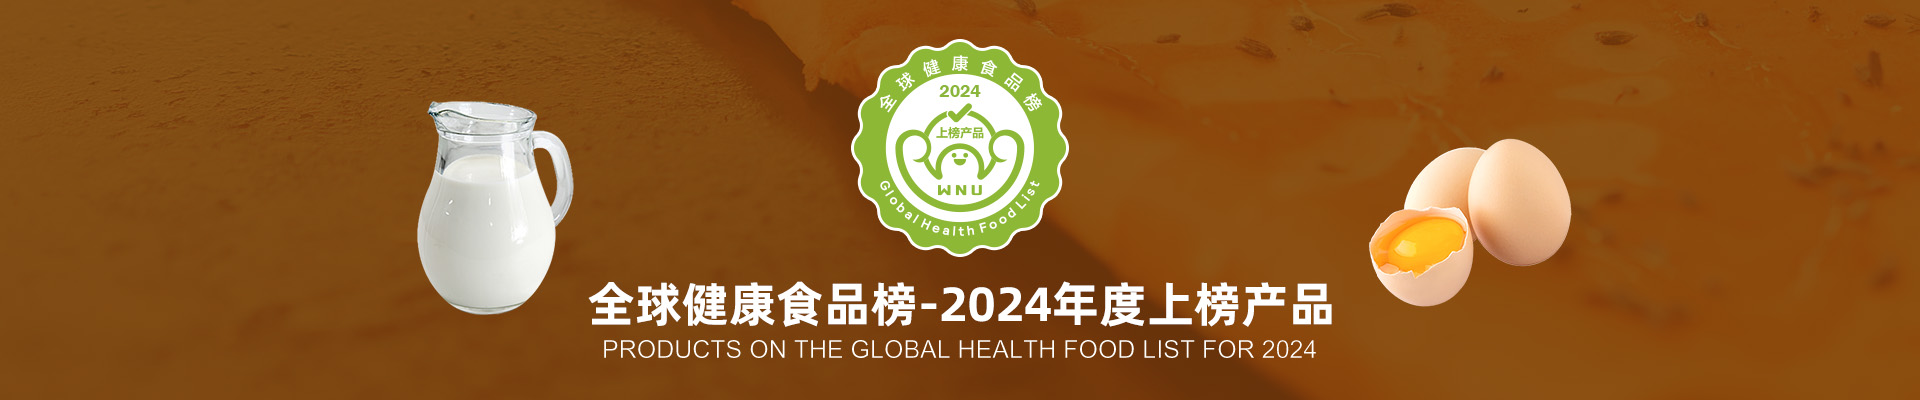 全球健康食品榜